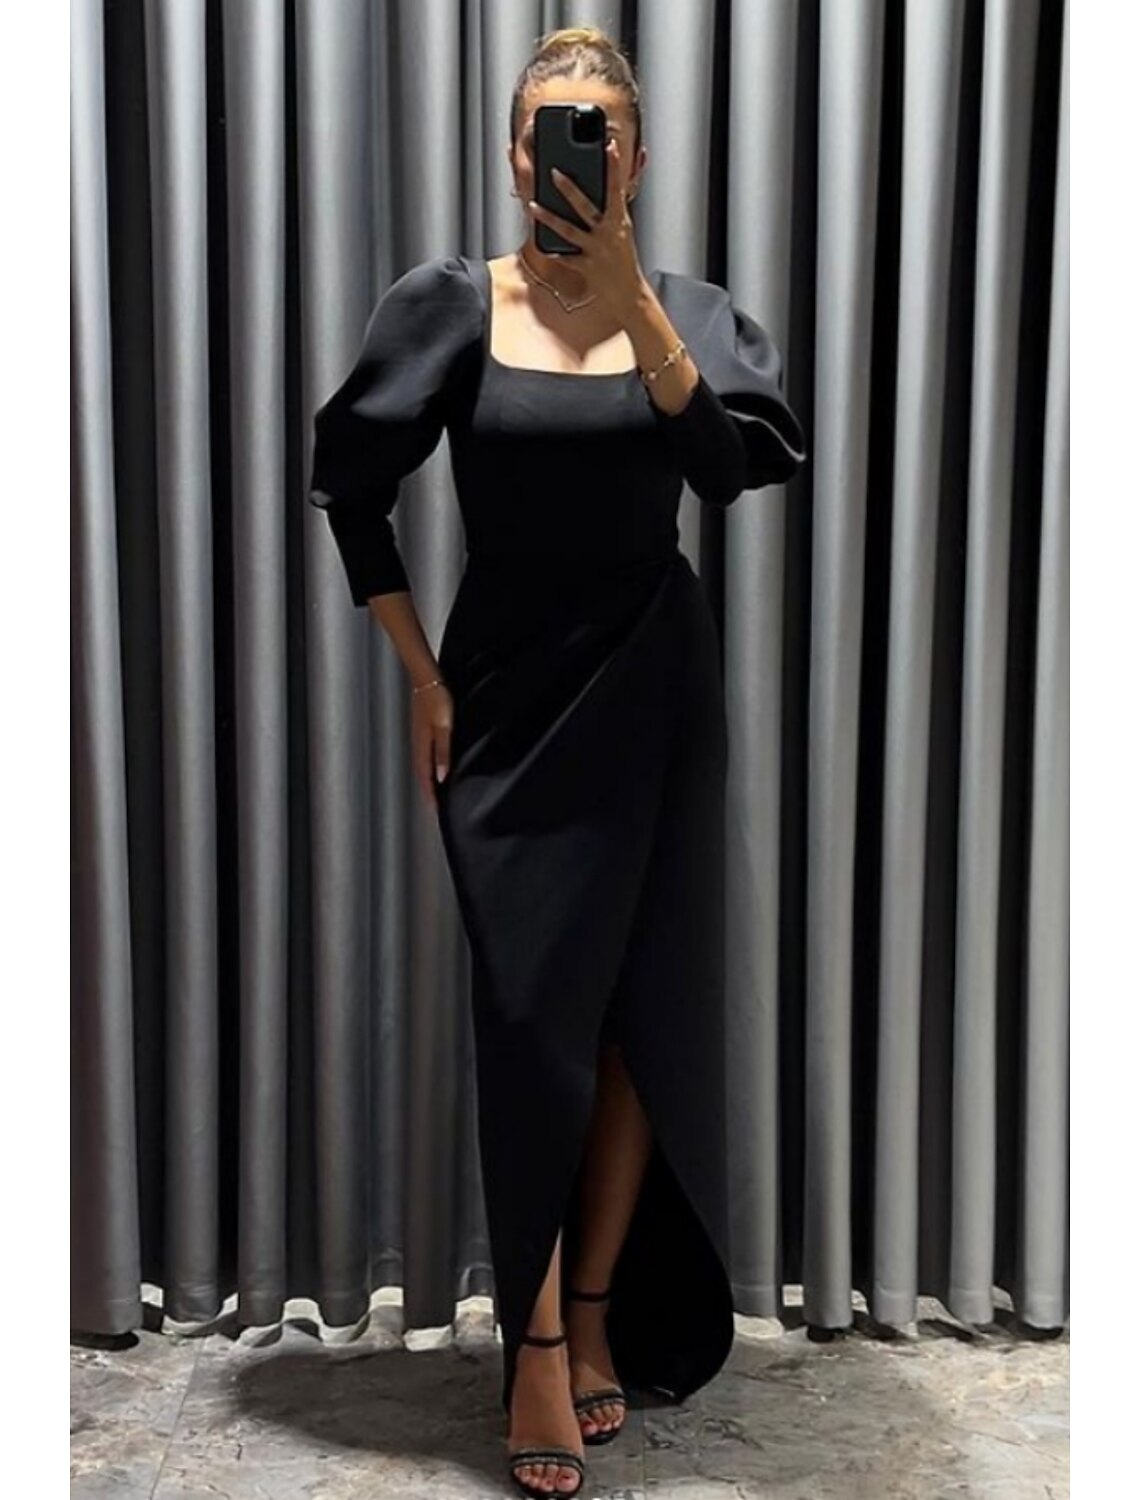 Black Dress Sheath / Column Evening Gown Elegant Dress Formal Fall Asymmetrical 3/4 Length Sleeve Square Neck Stretch Fabric